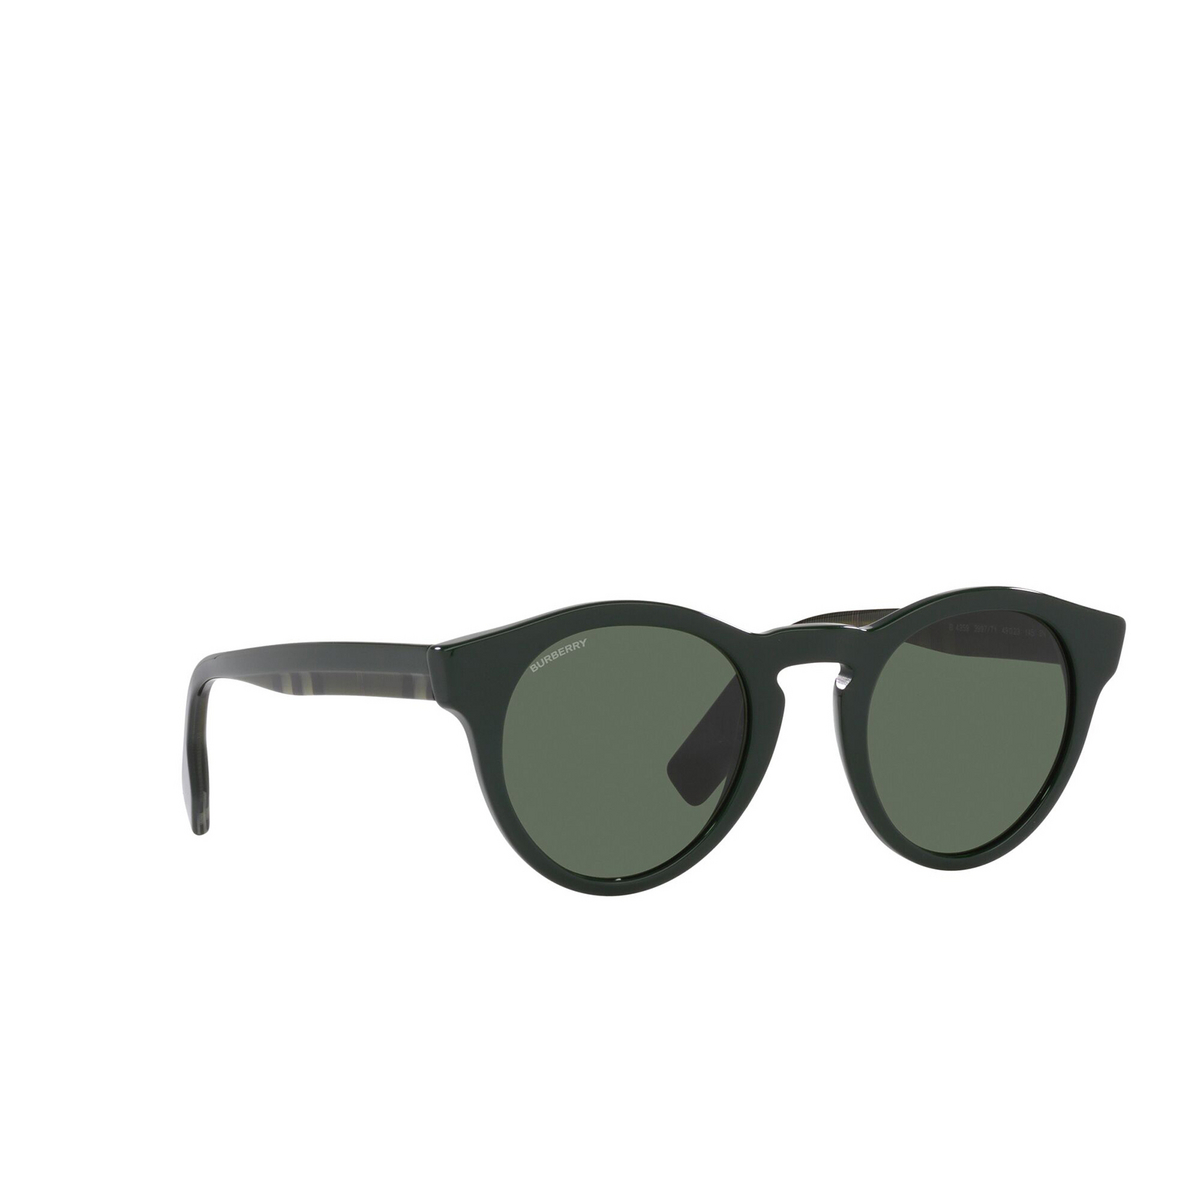 Burberry® Round Sunglasses: BE4359 Reid color 399771 Green - three-quarters view